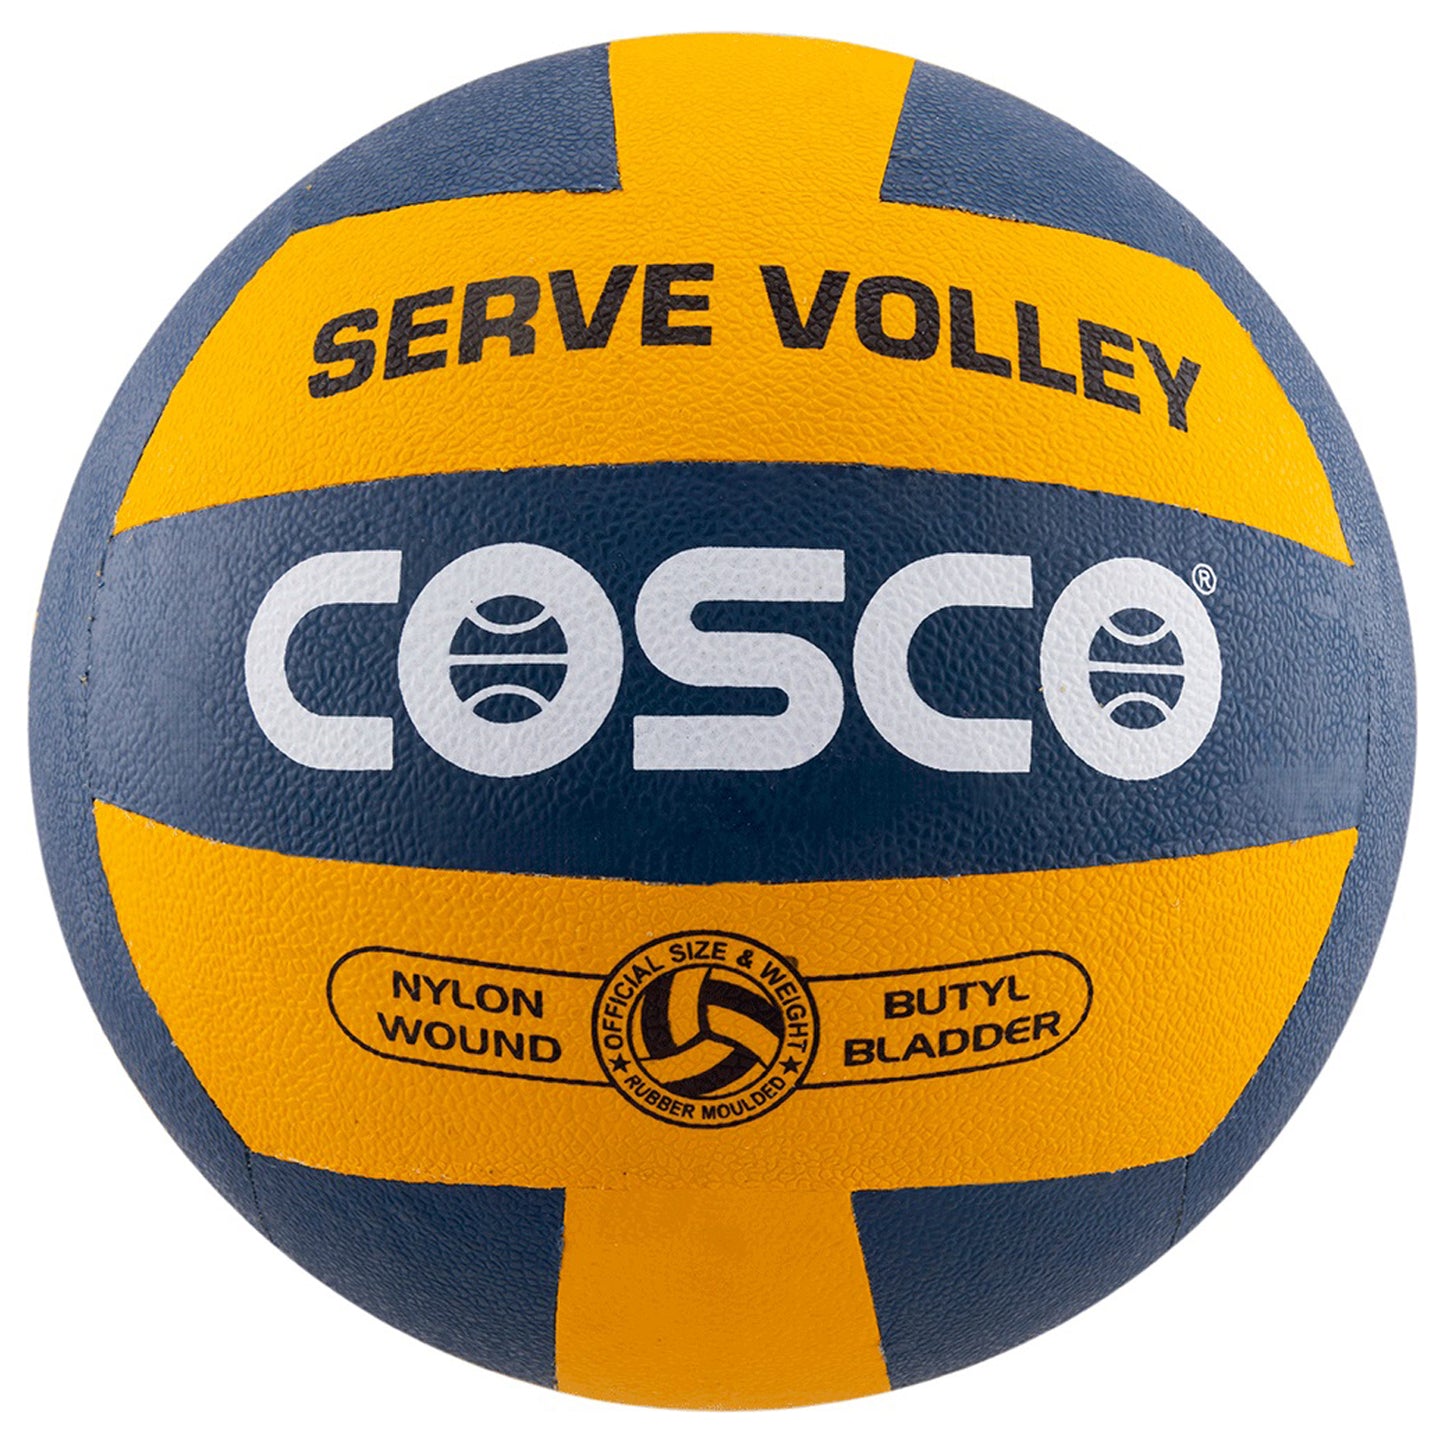 Cosco Serve Volleyball , Yellow/Blue - Size 4 - Best Price online Prokicksports.com